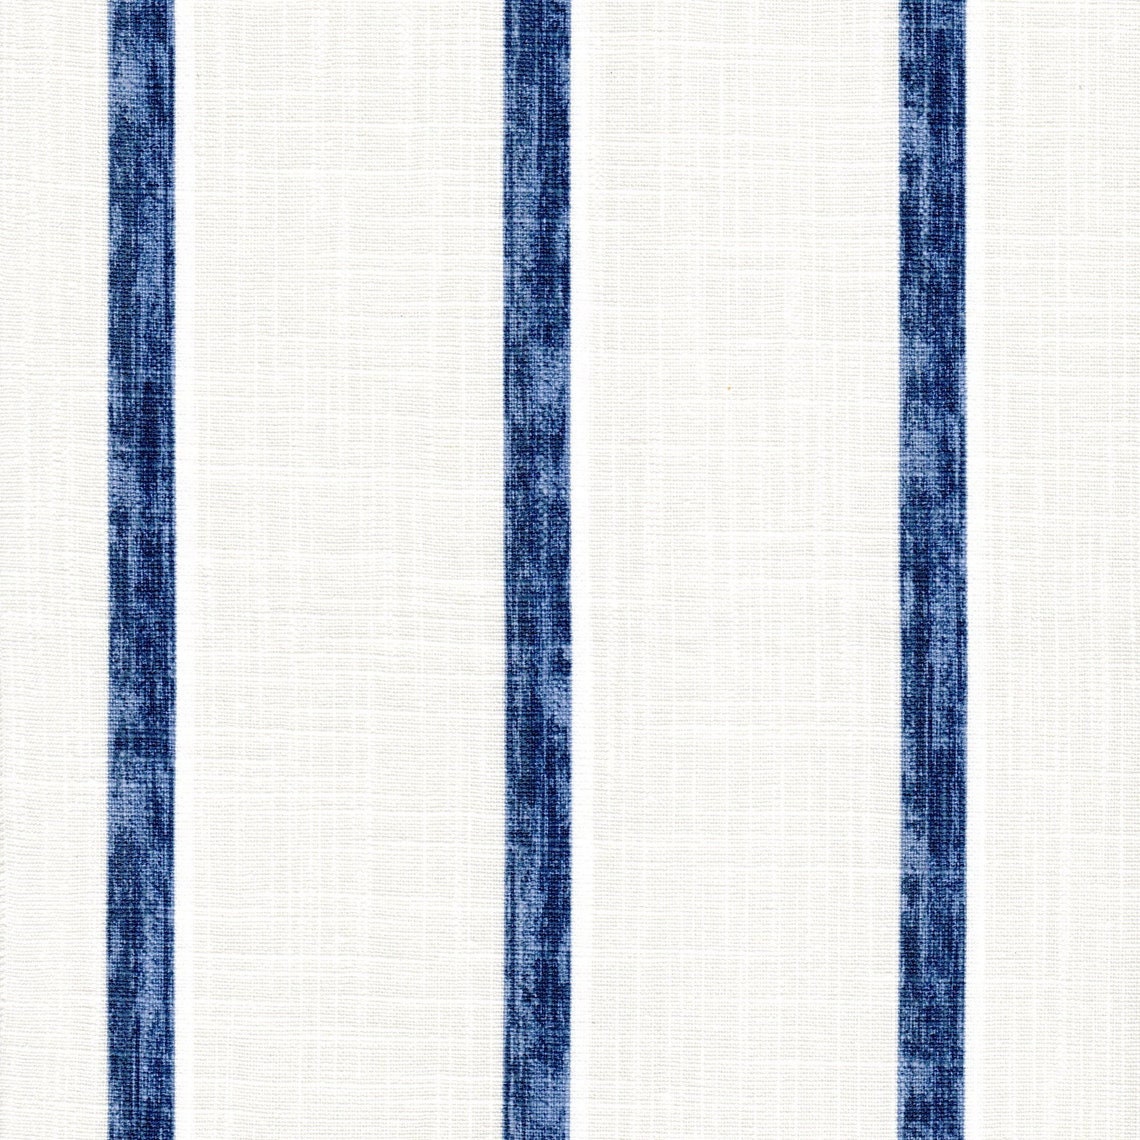 tailored tier cafe curtain panels pair in modern farmhouse miles italian denim blue stripe